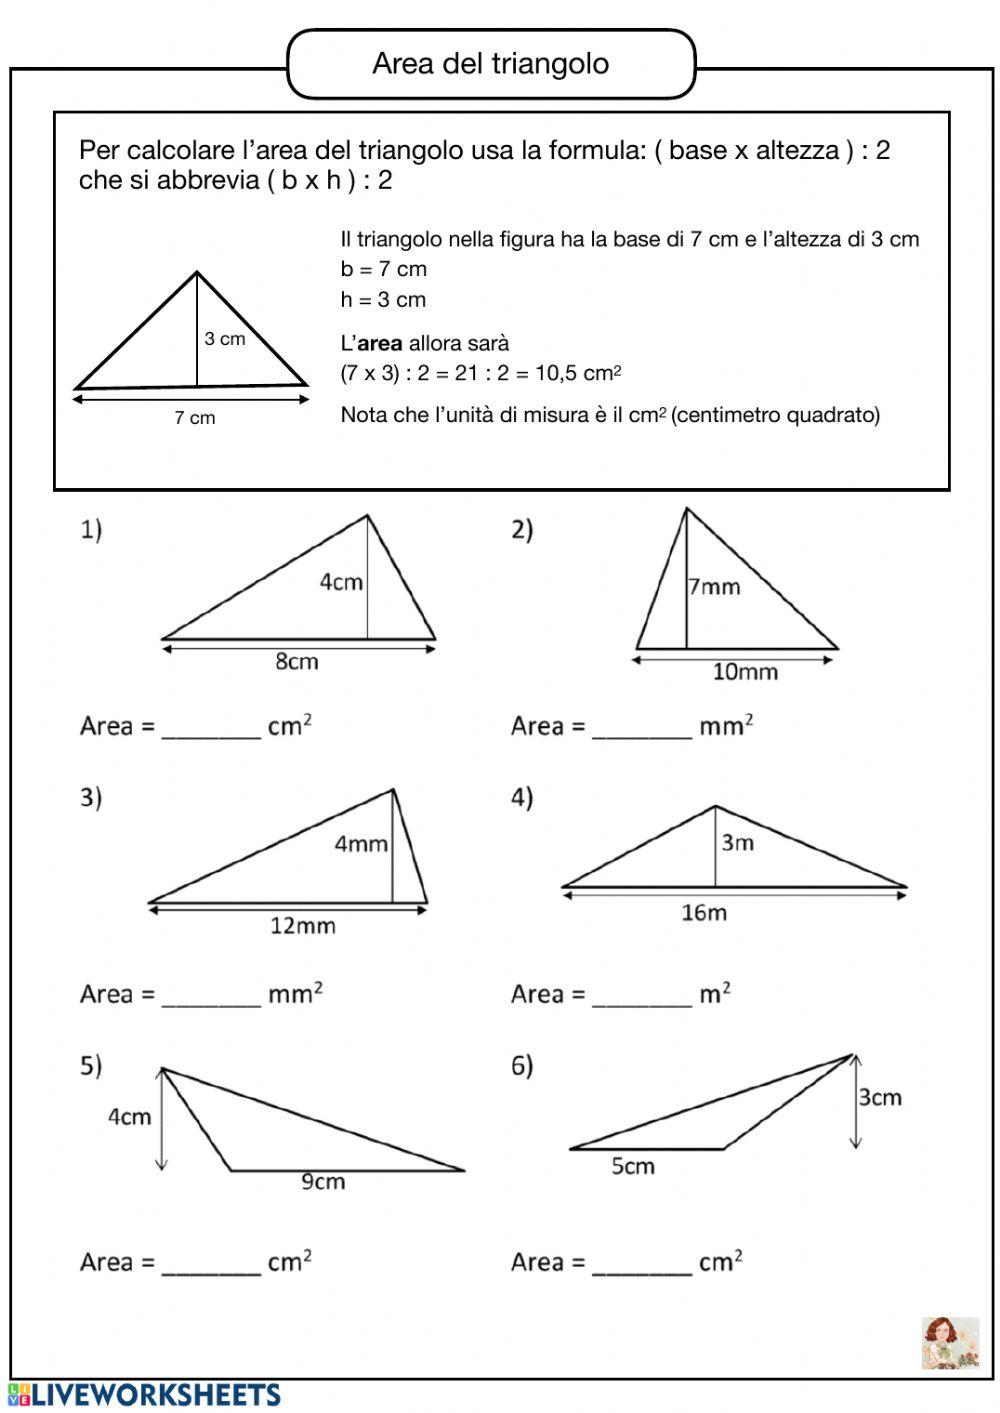 Area triangolo